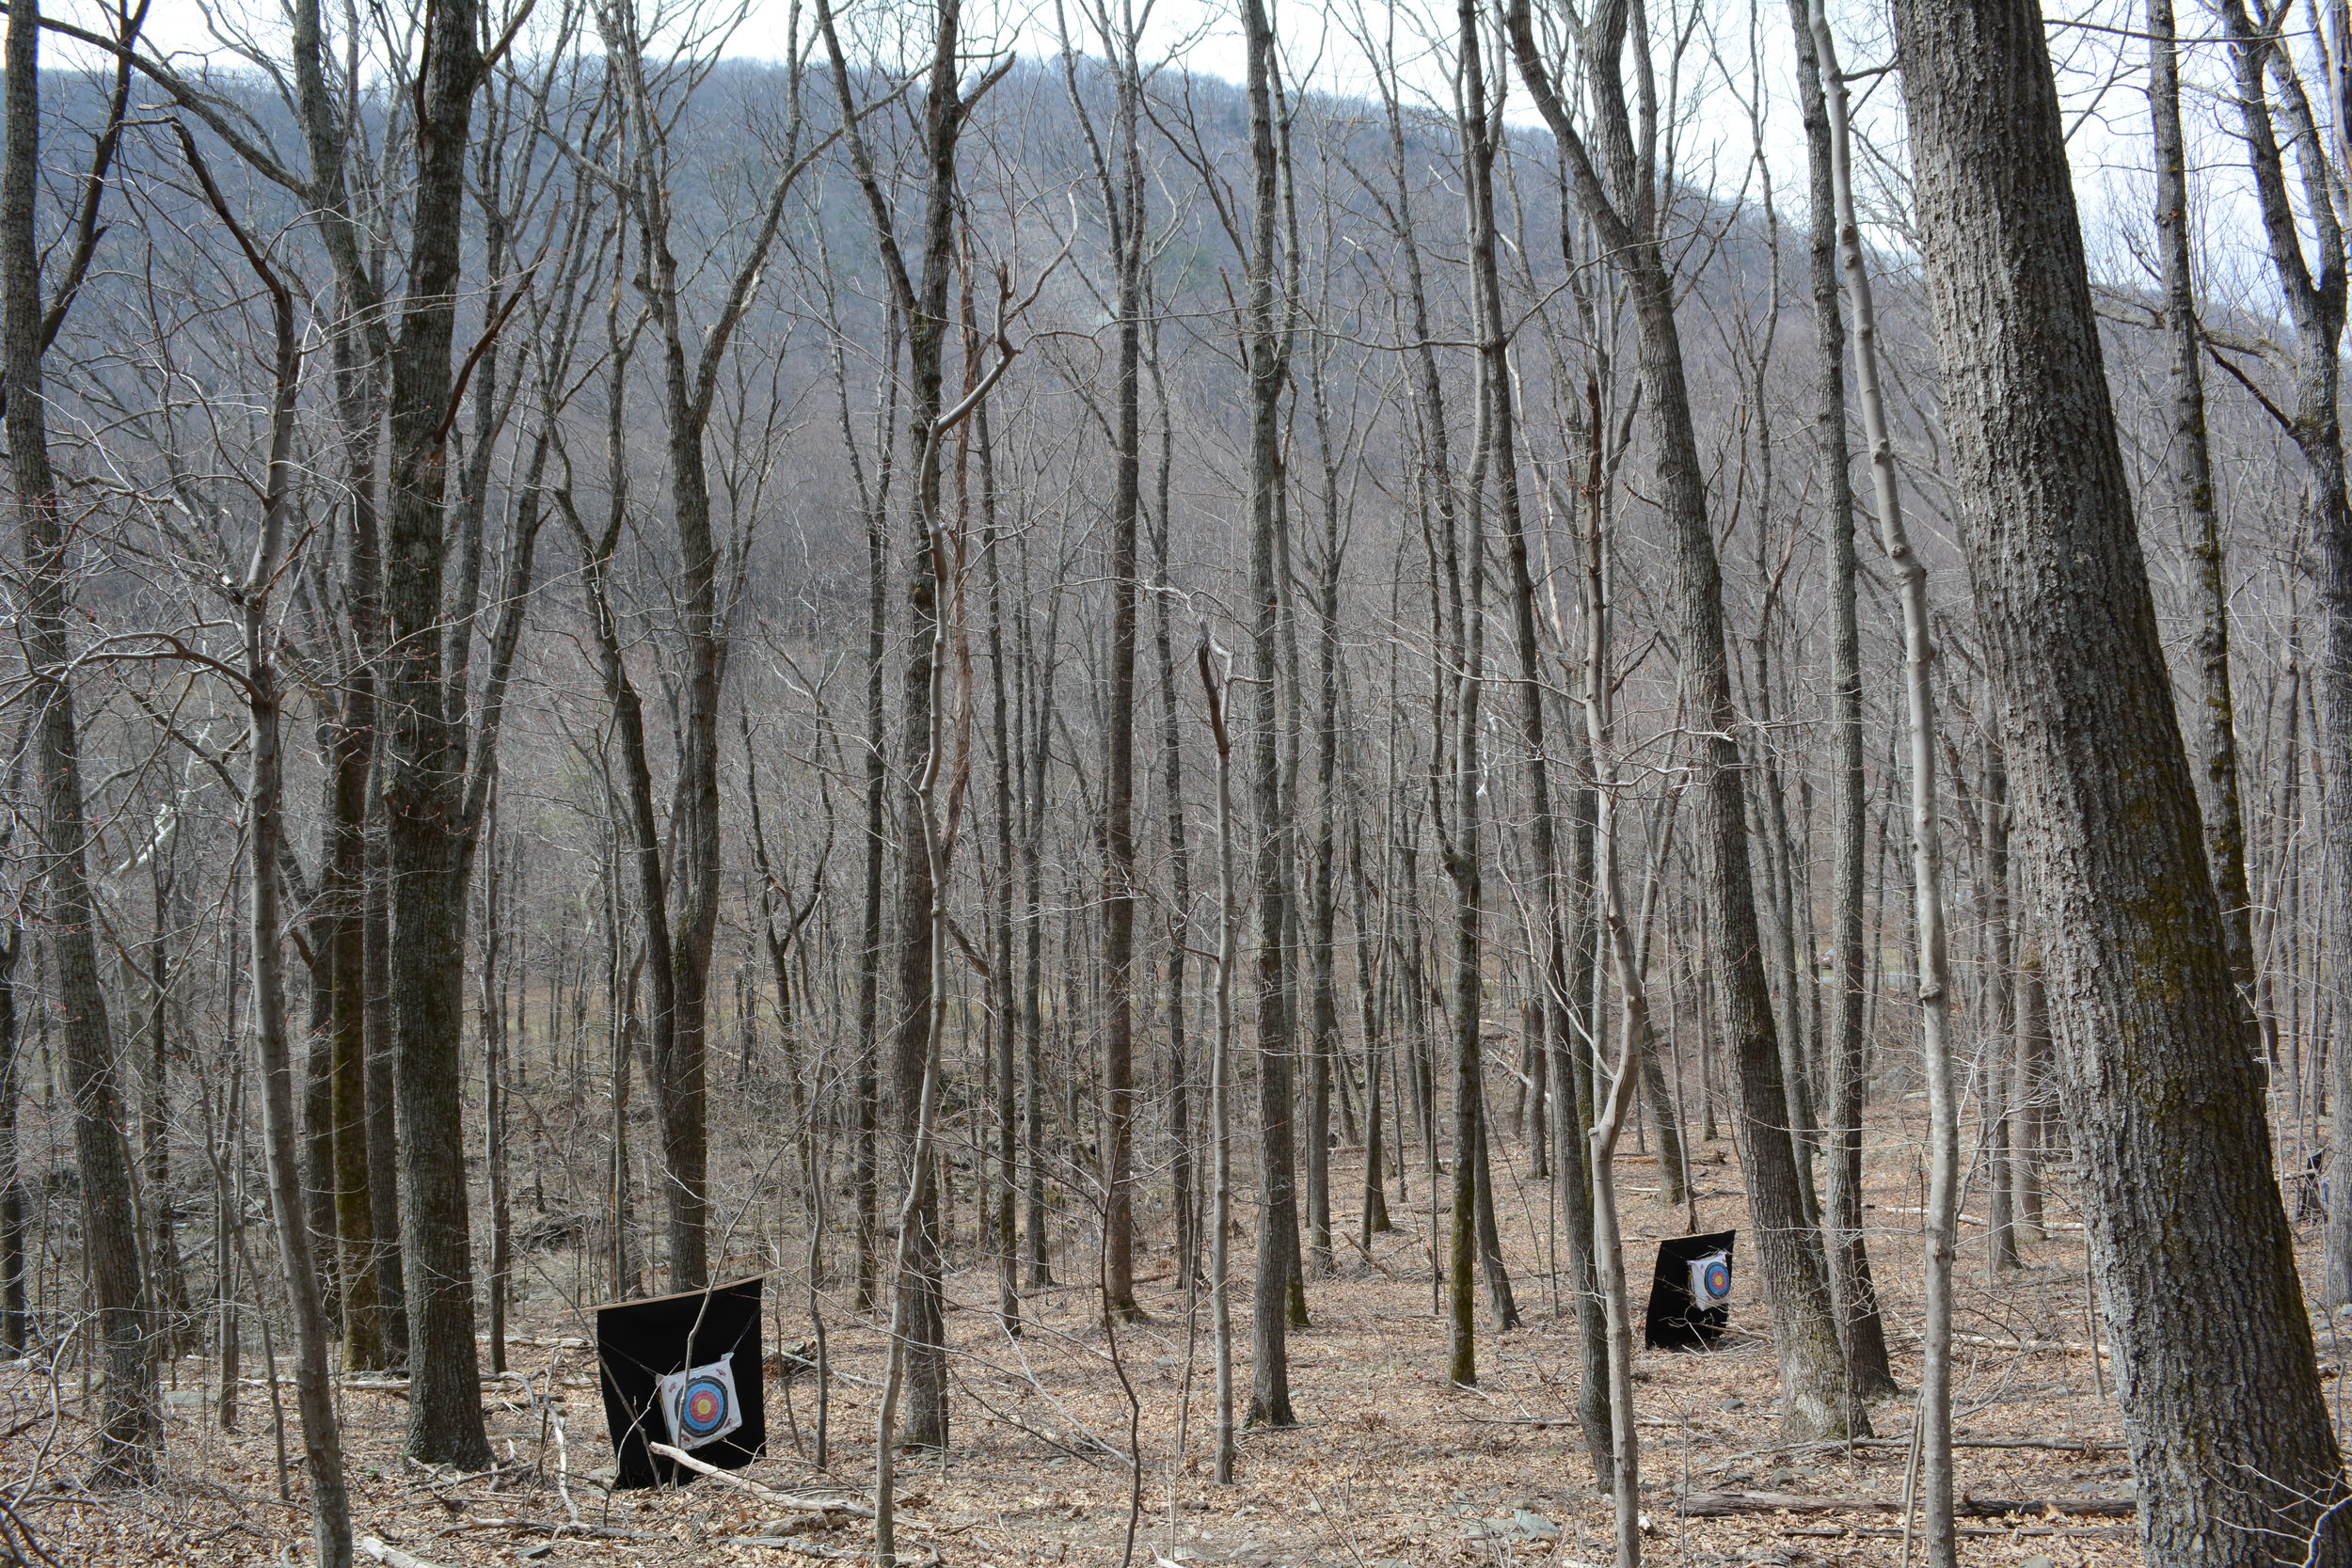 field archery targets-woods-mountains 032517.JPG